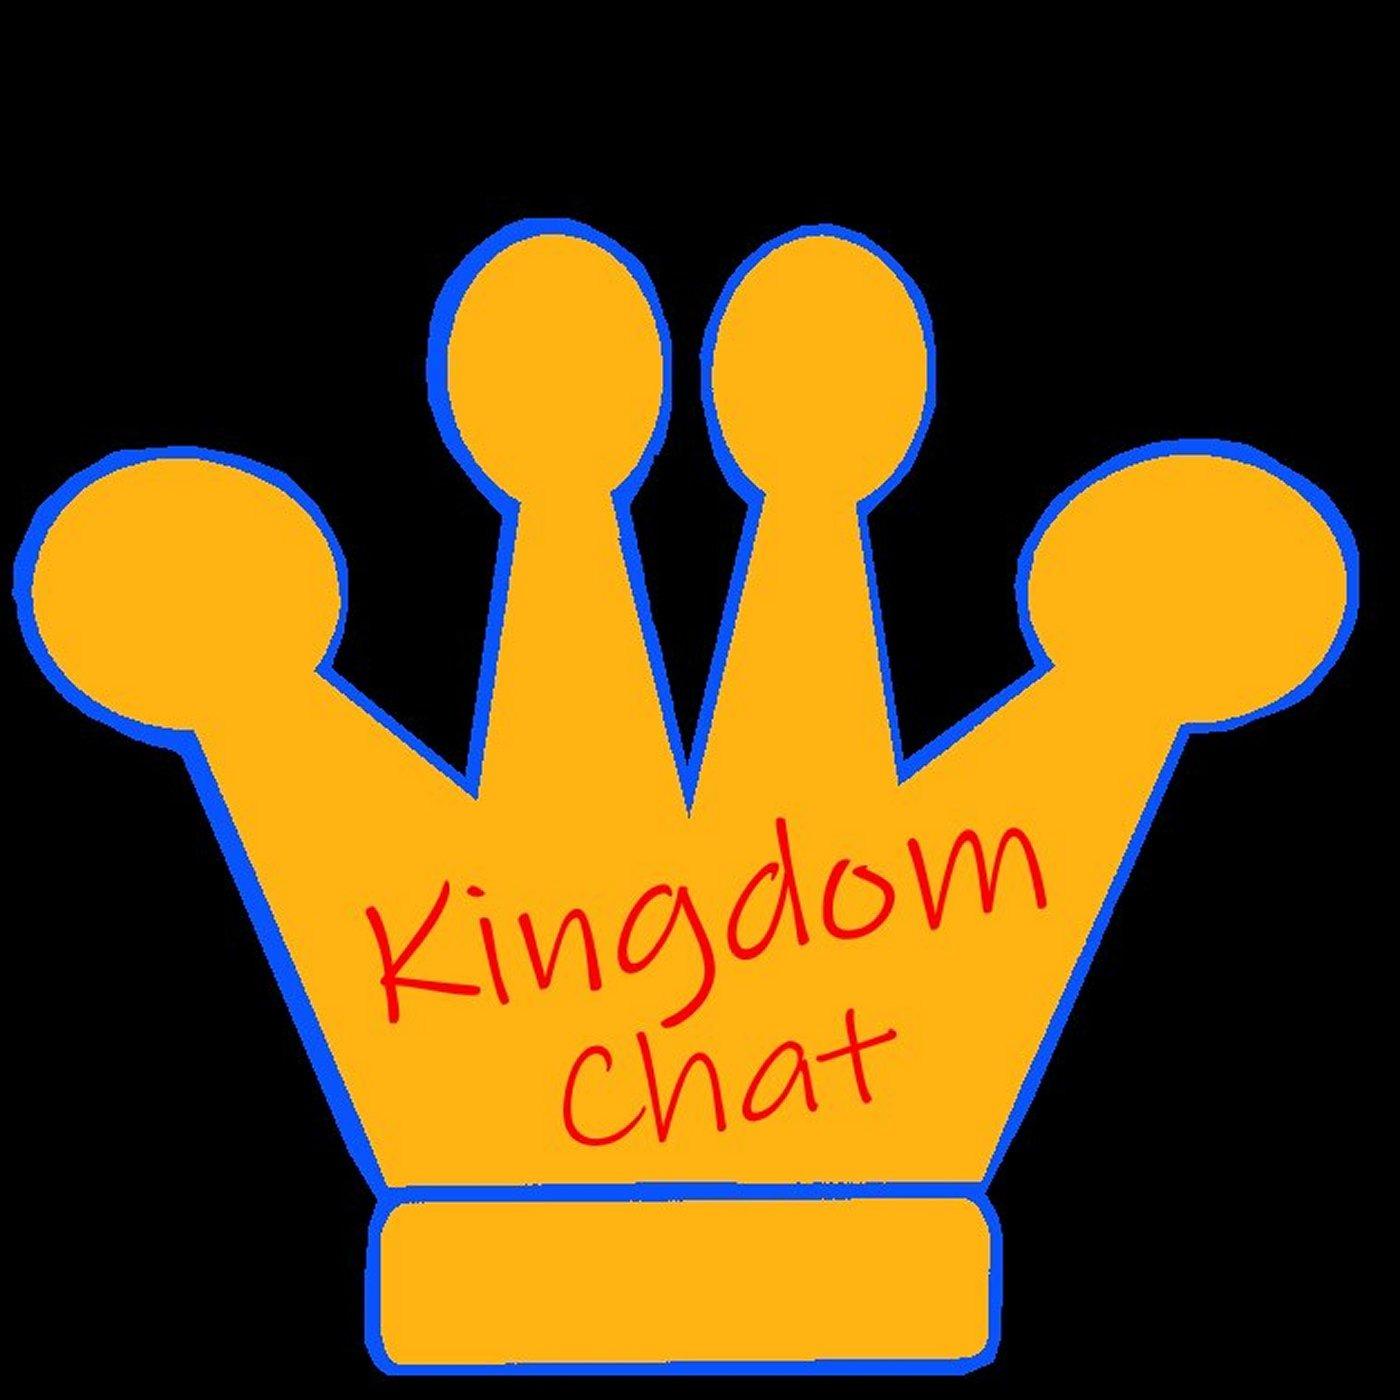 Kingdom Chat